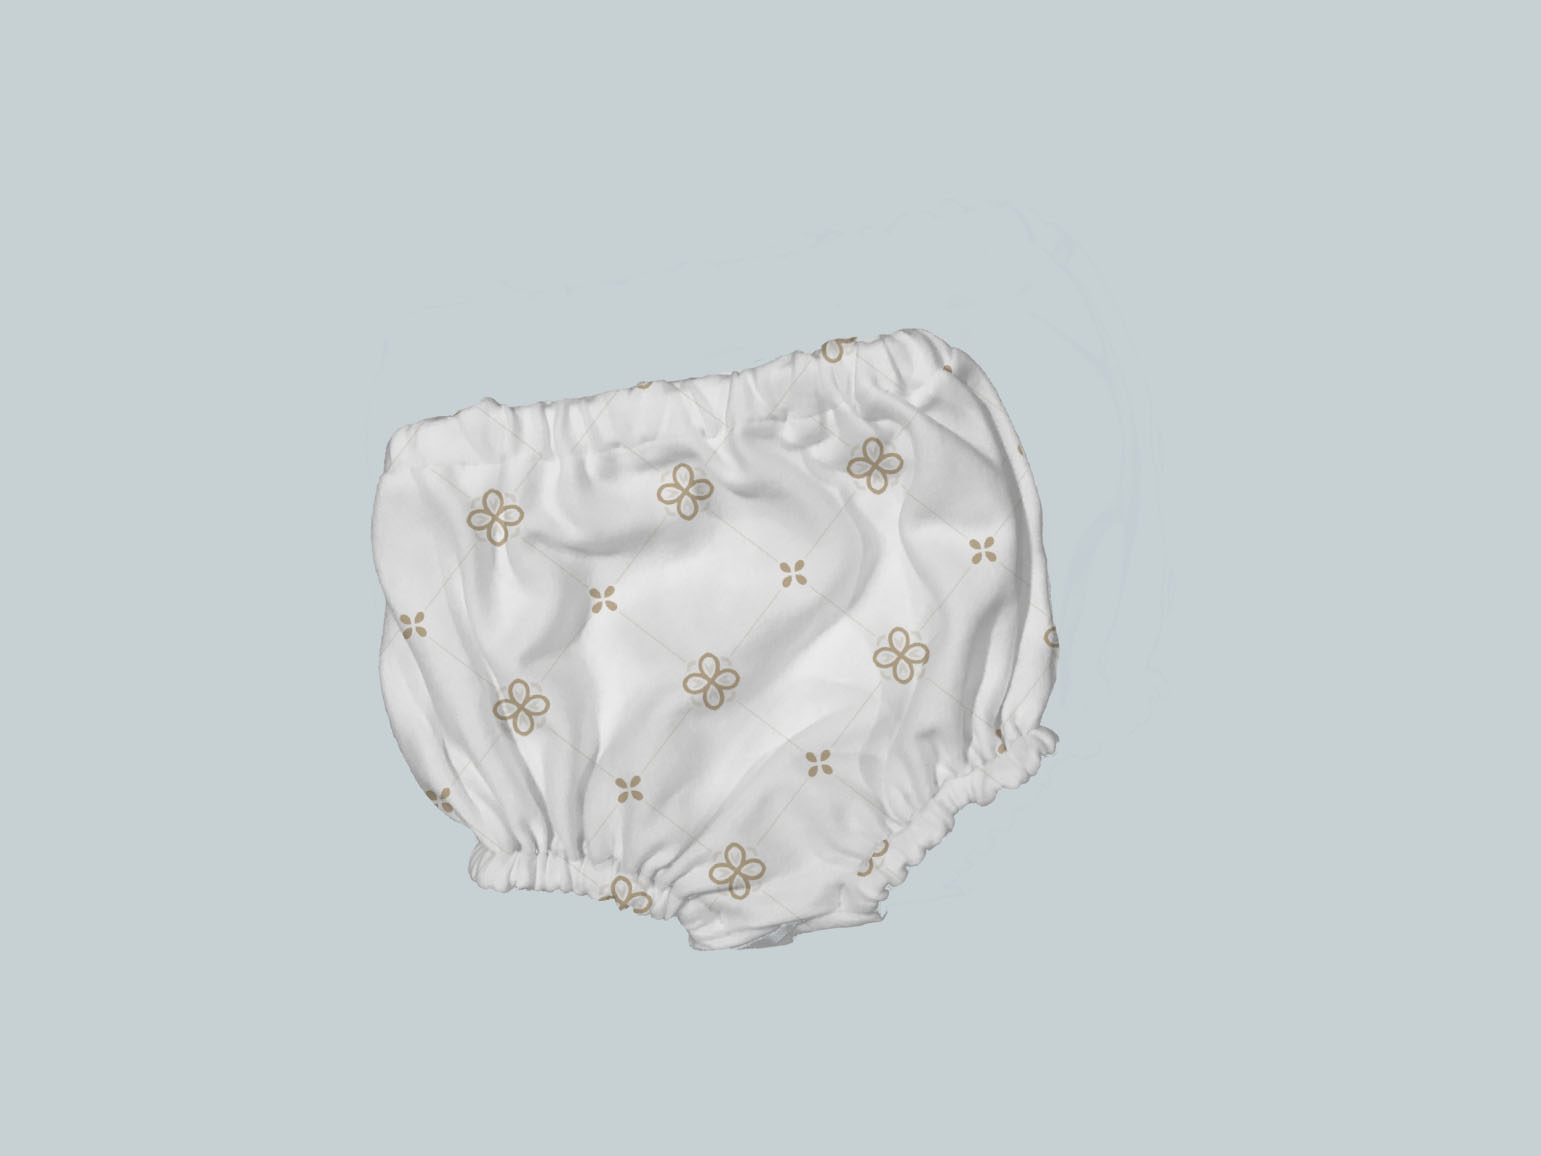 Bummies/Diaper Cover - Dainty Dots